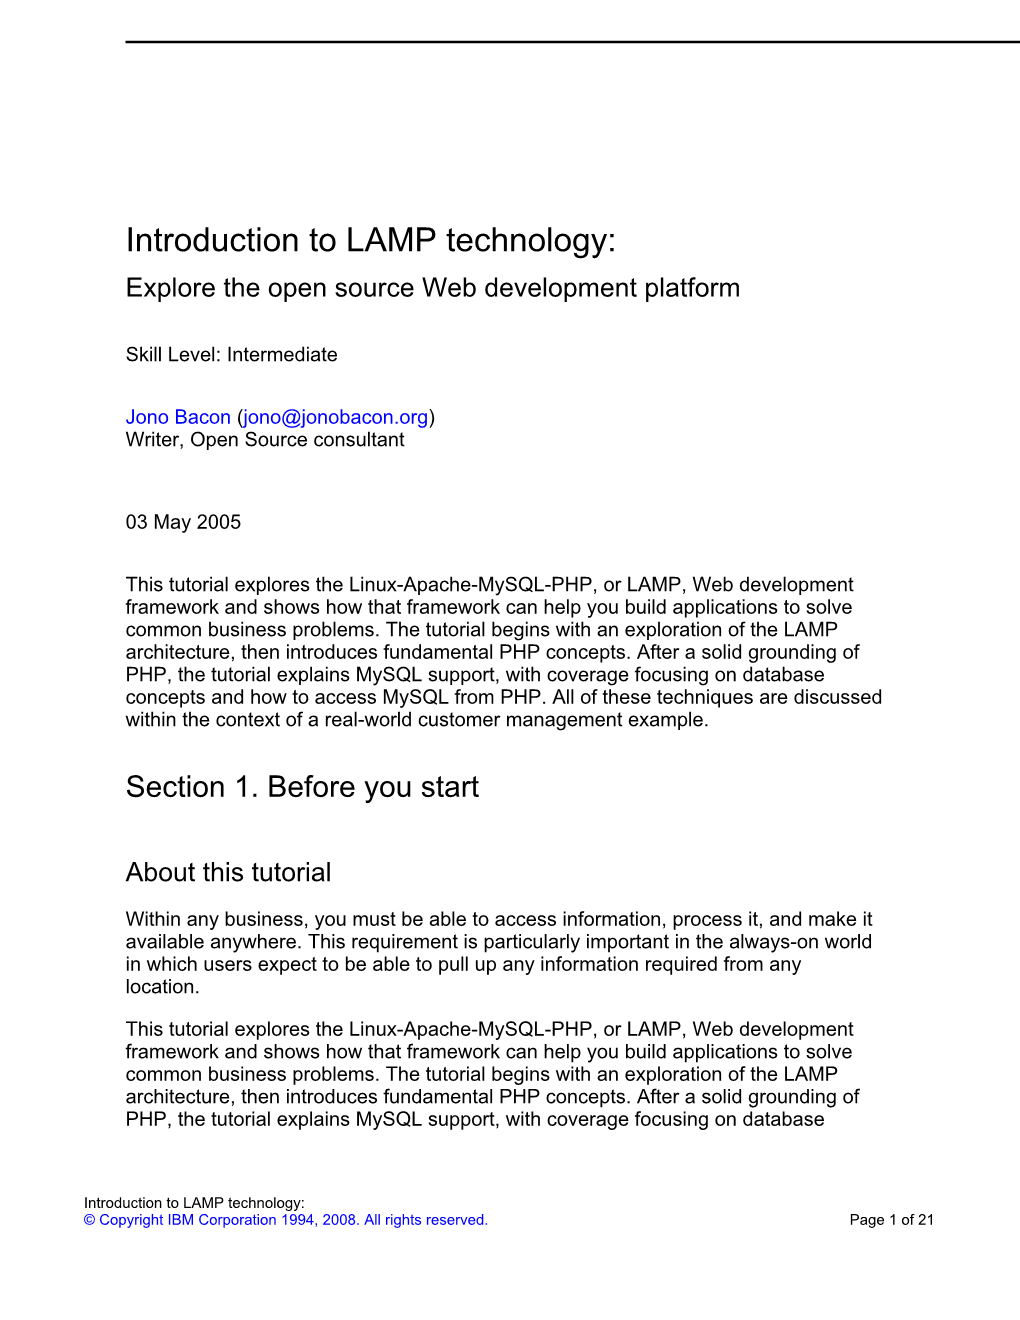 Introduction to LAMP Technology: Explore the Open Source Web Development Platform